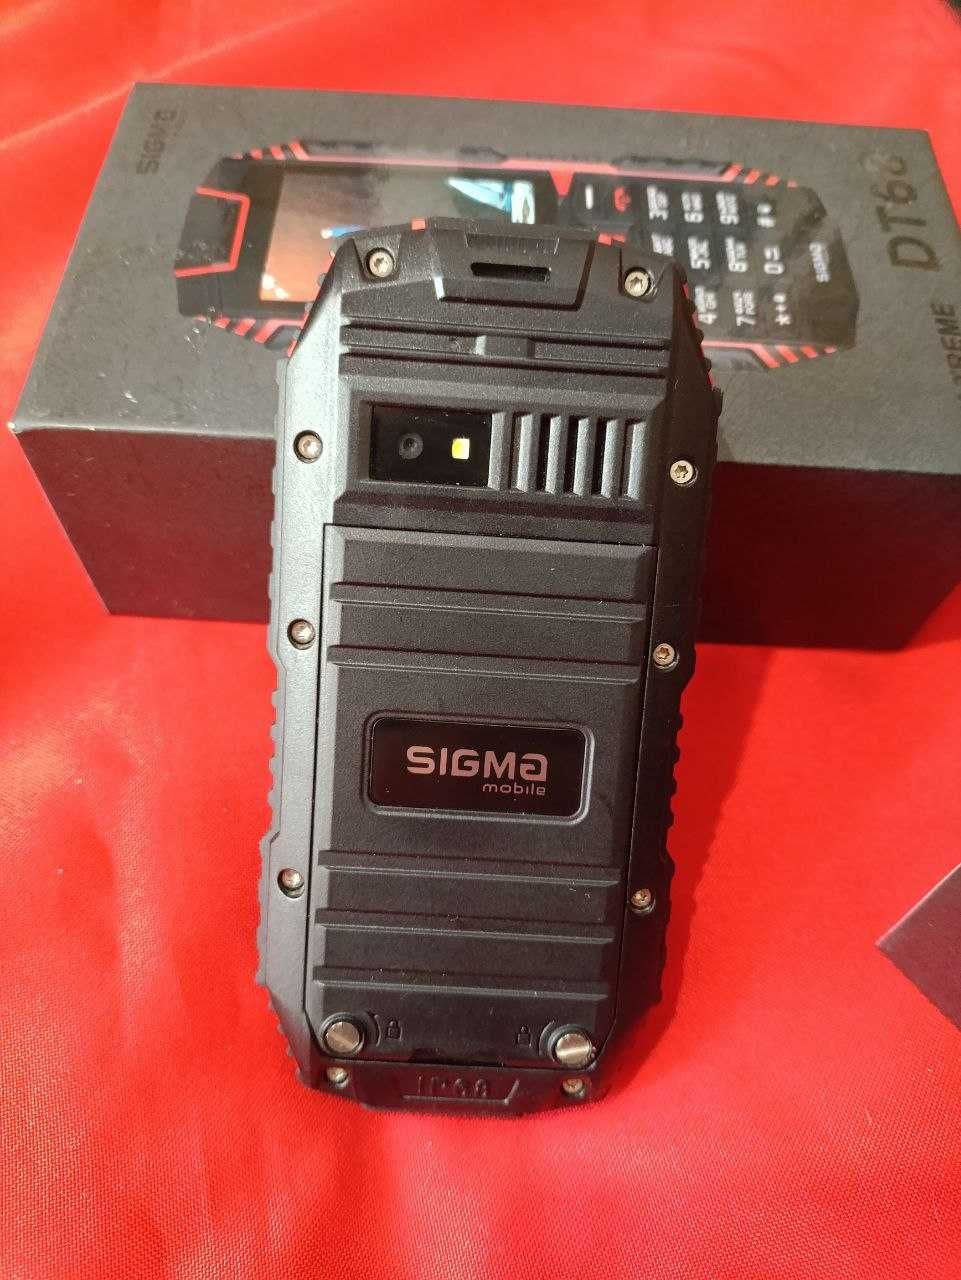 Sigma mobile X-treme DT68